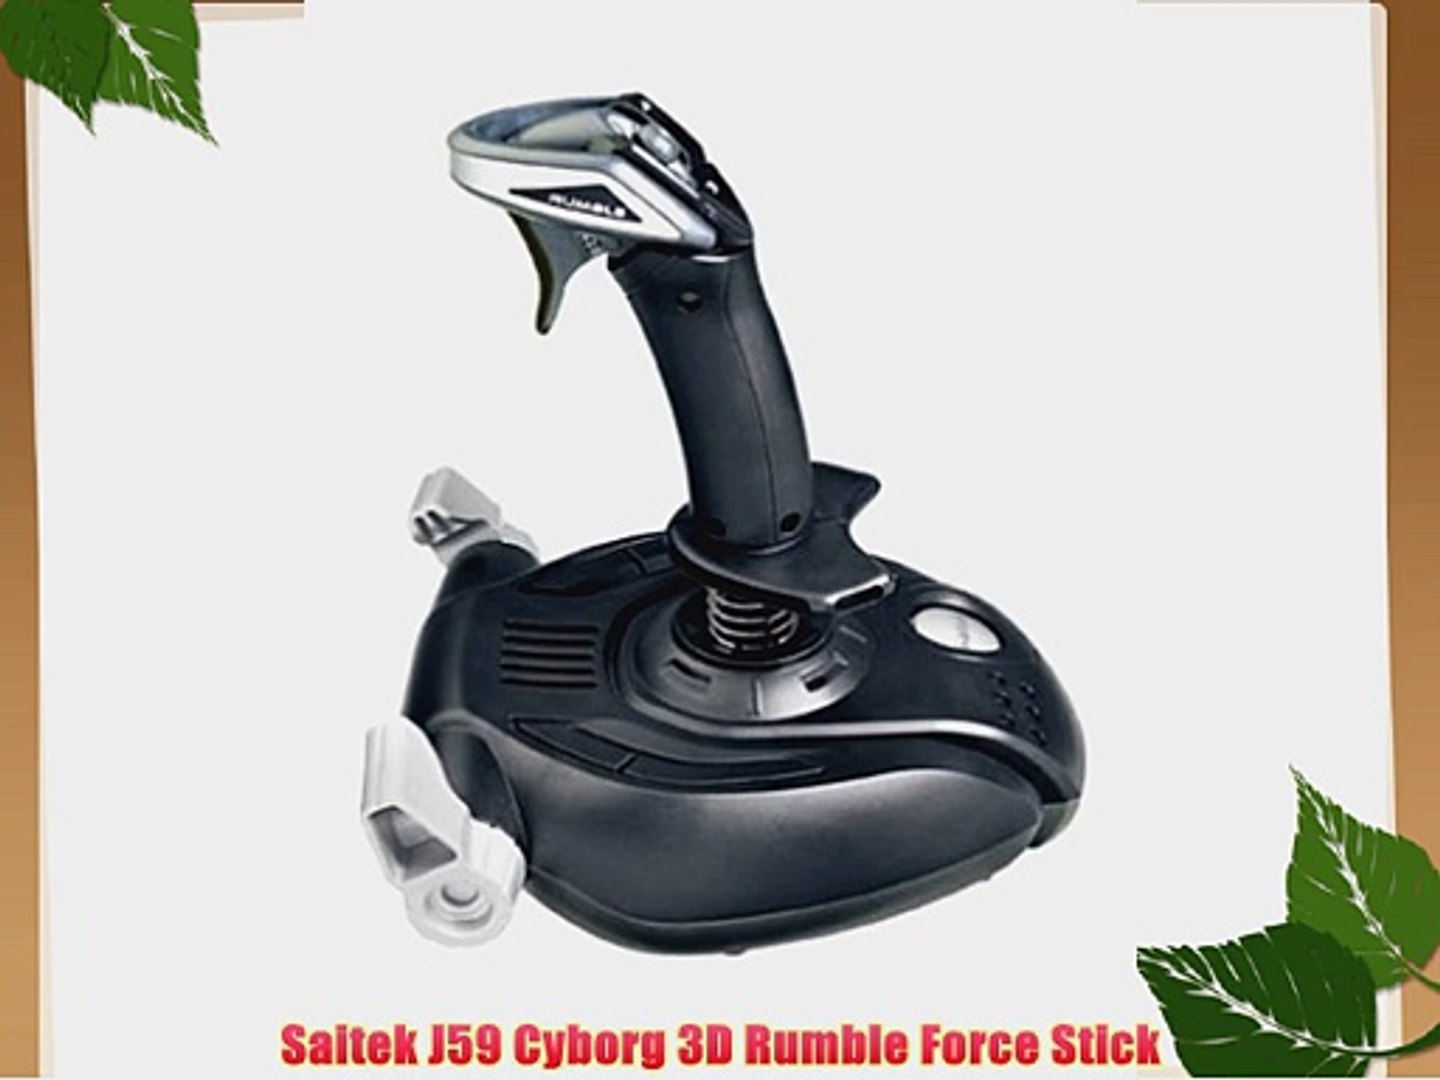 Saitek J59 Cyborg 3D Rumble Force Stick - video Dailymotion